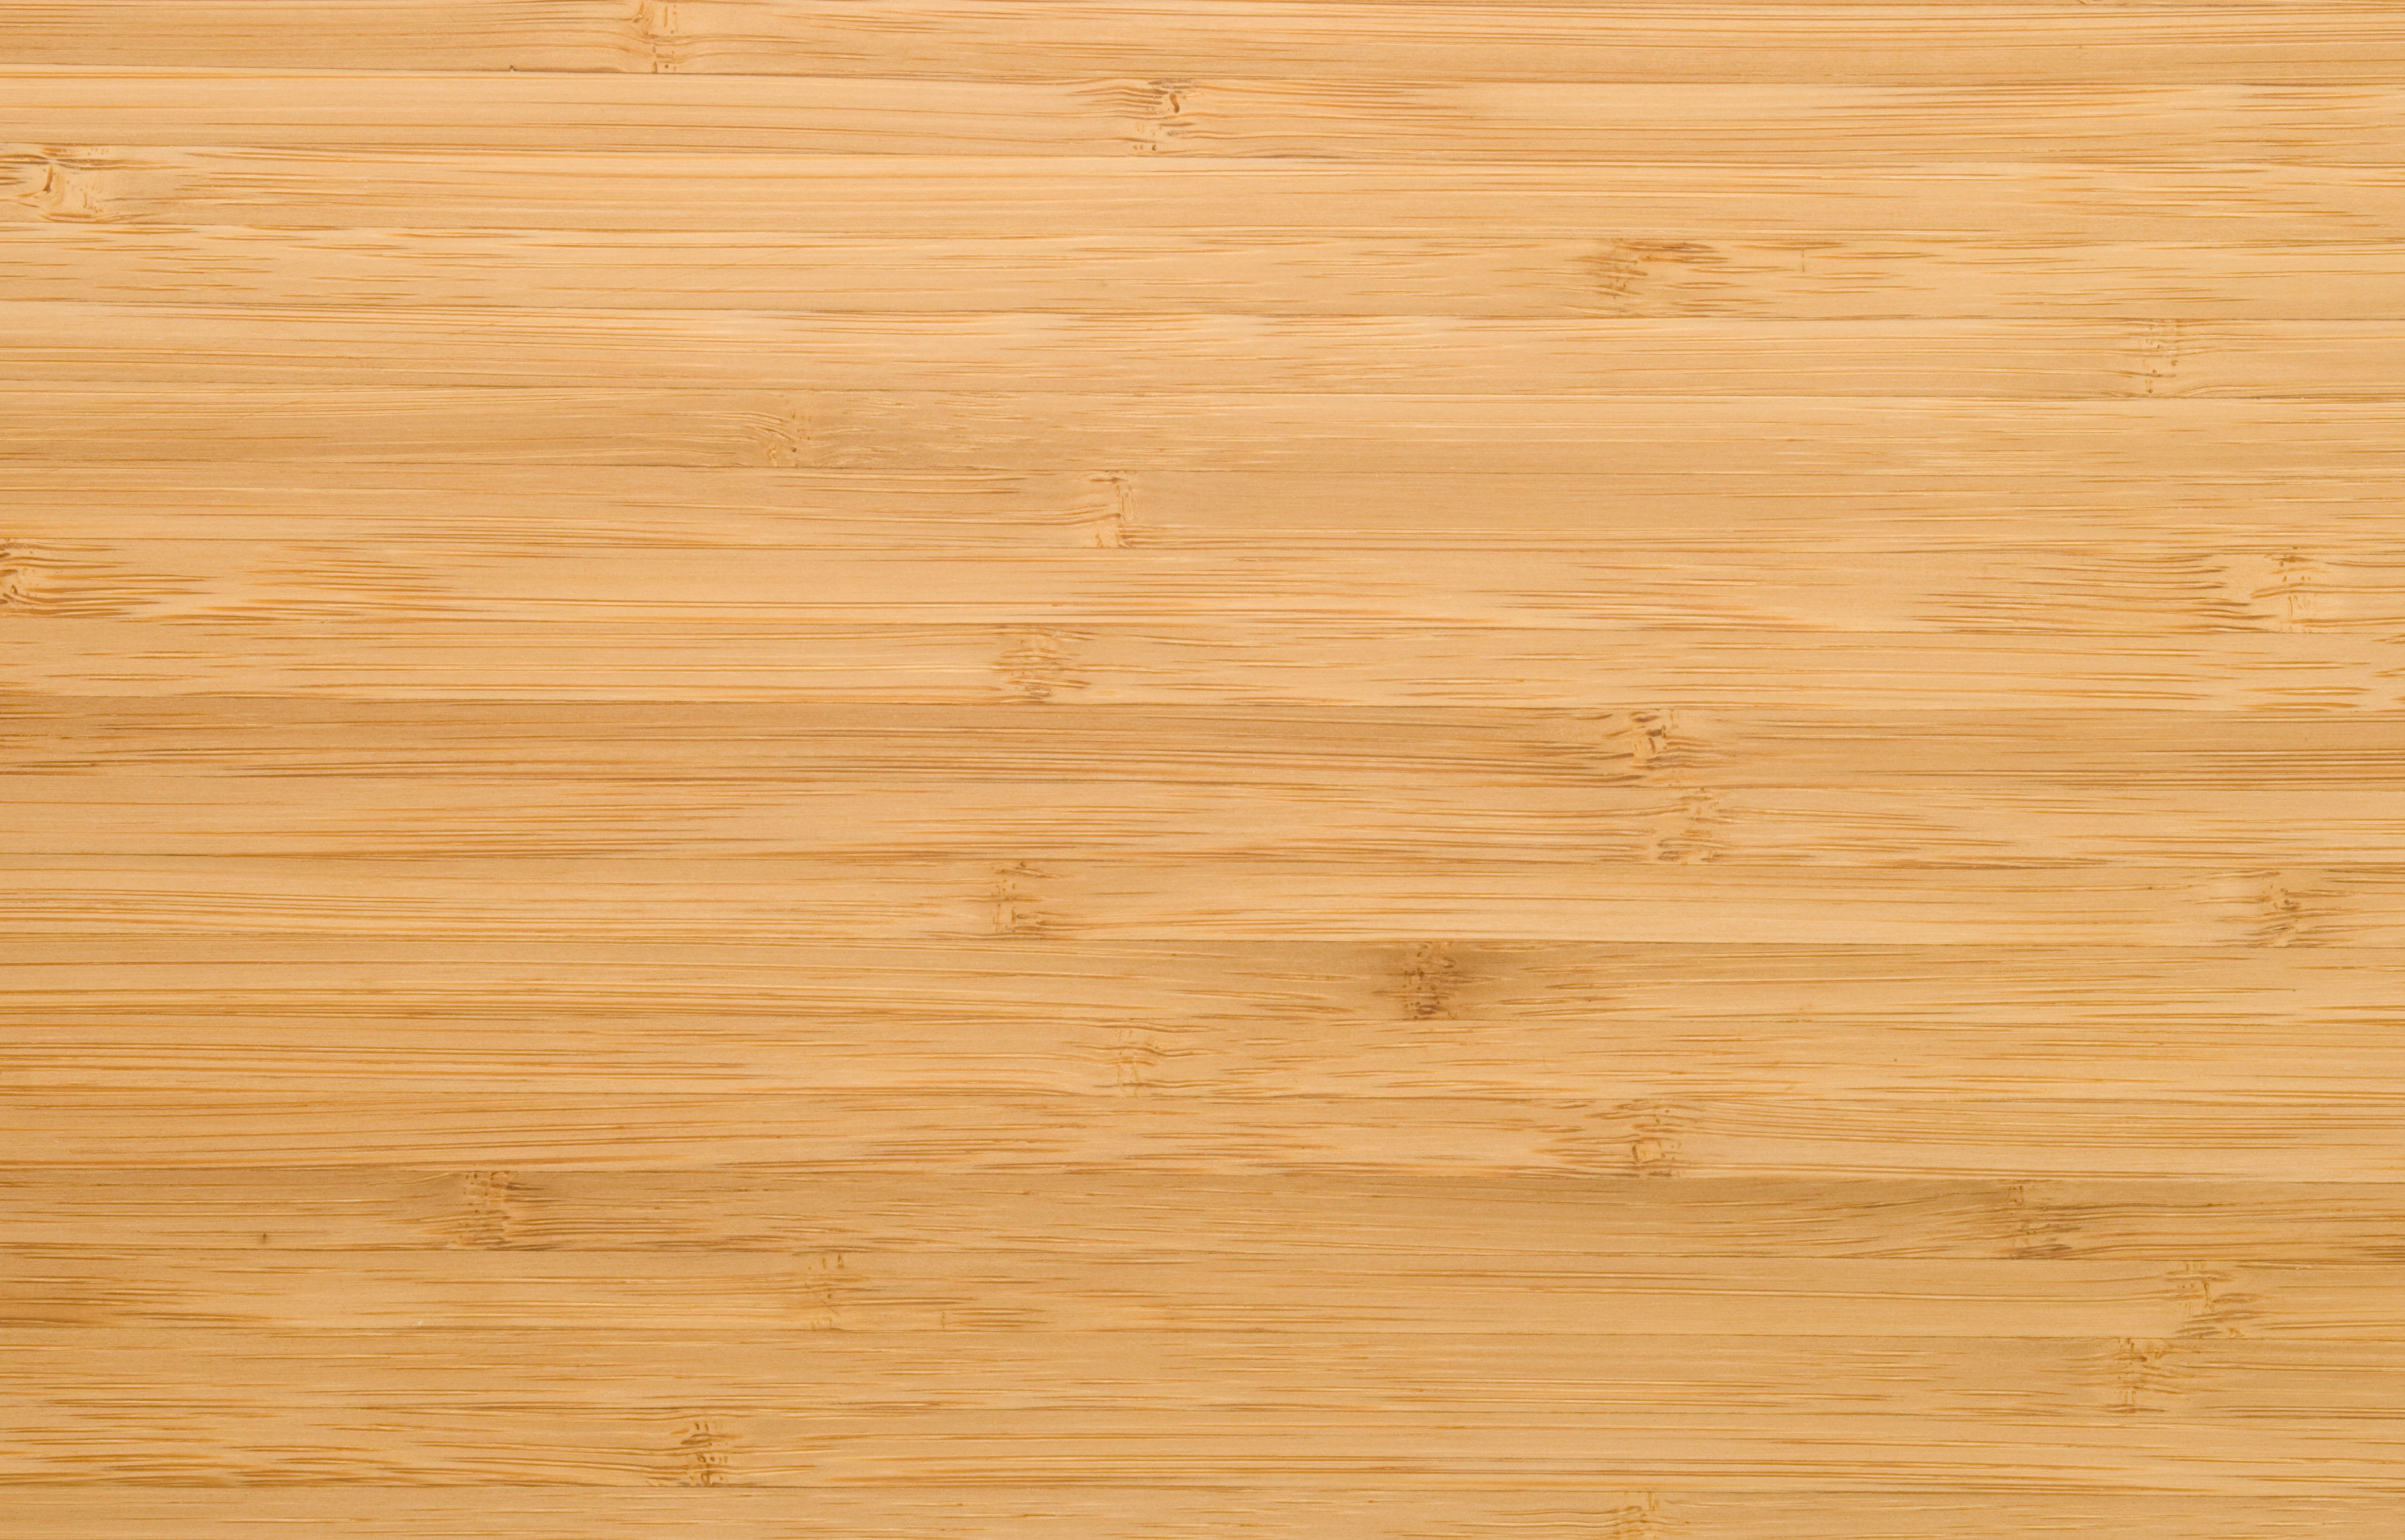 11 Popular Buffing Hardwood Floors Diy 2024 free download buffing hardwood floors diy of can you use a wet mop on bamboo floors within natural bamboo plank 94259870 59aeefd4519de20010d5c648